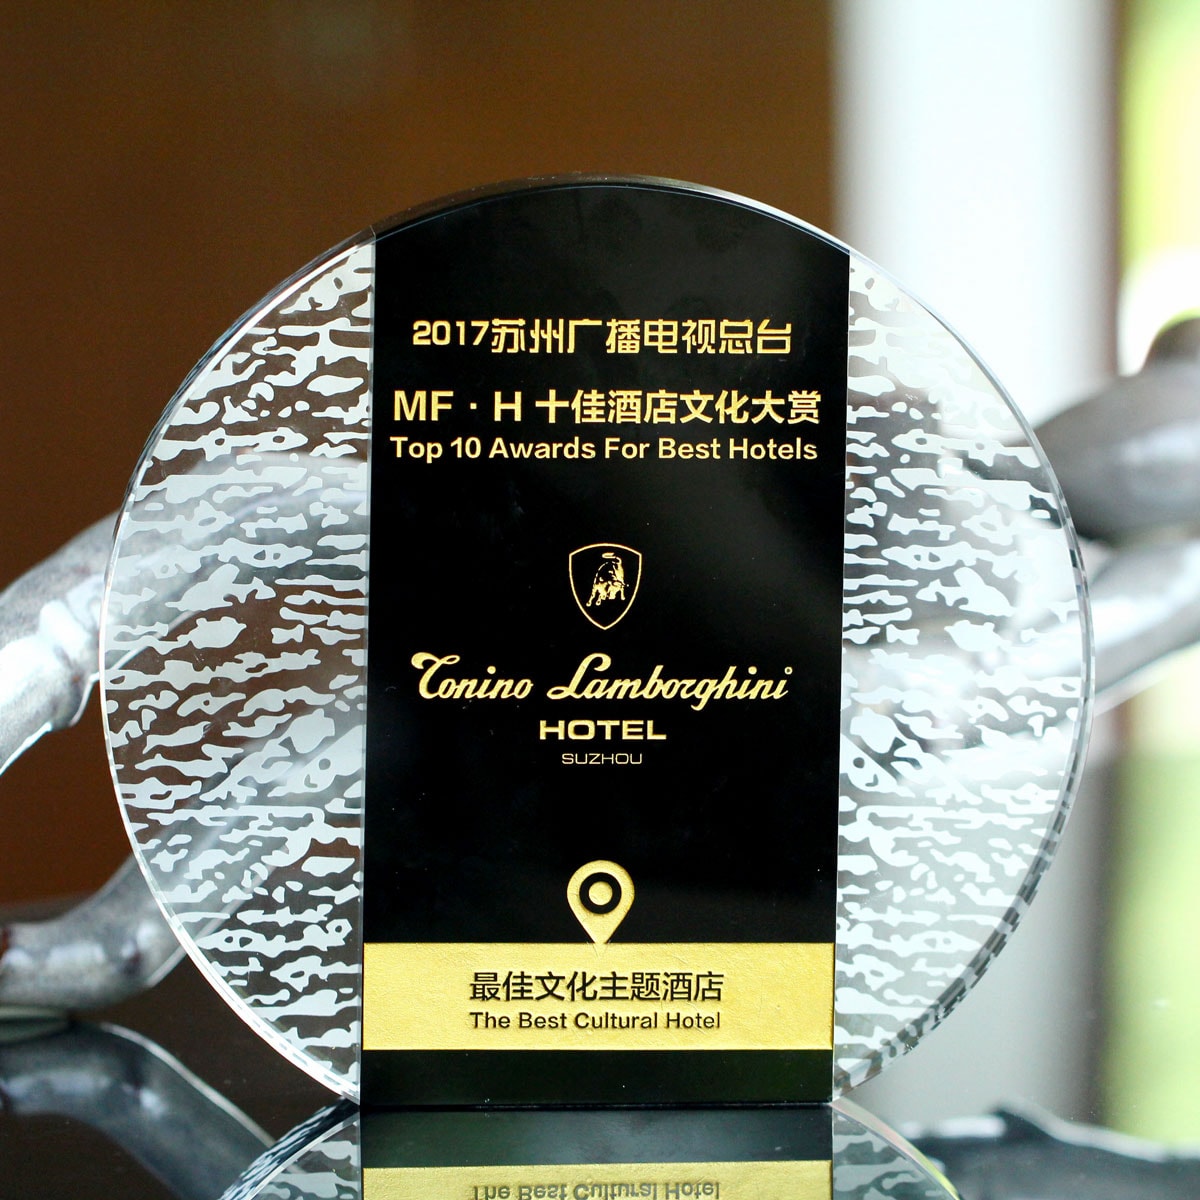 Tonino Lamborghini Hotel Suzhou Won MF.H – The Best Cultural Hotel Award